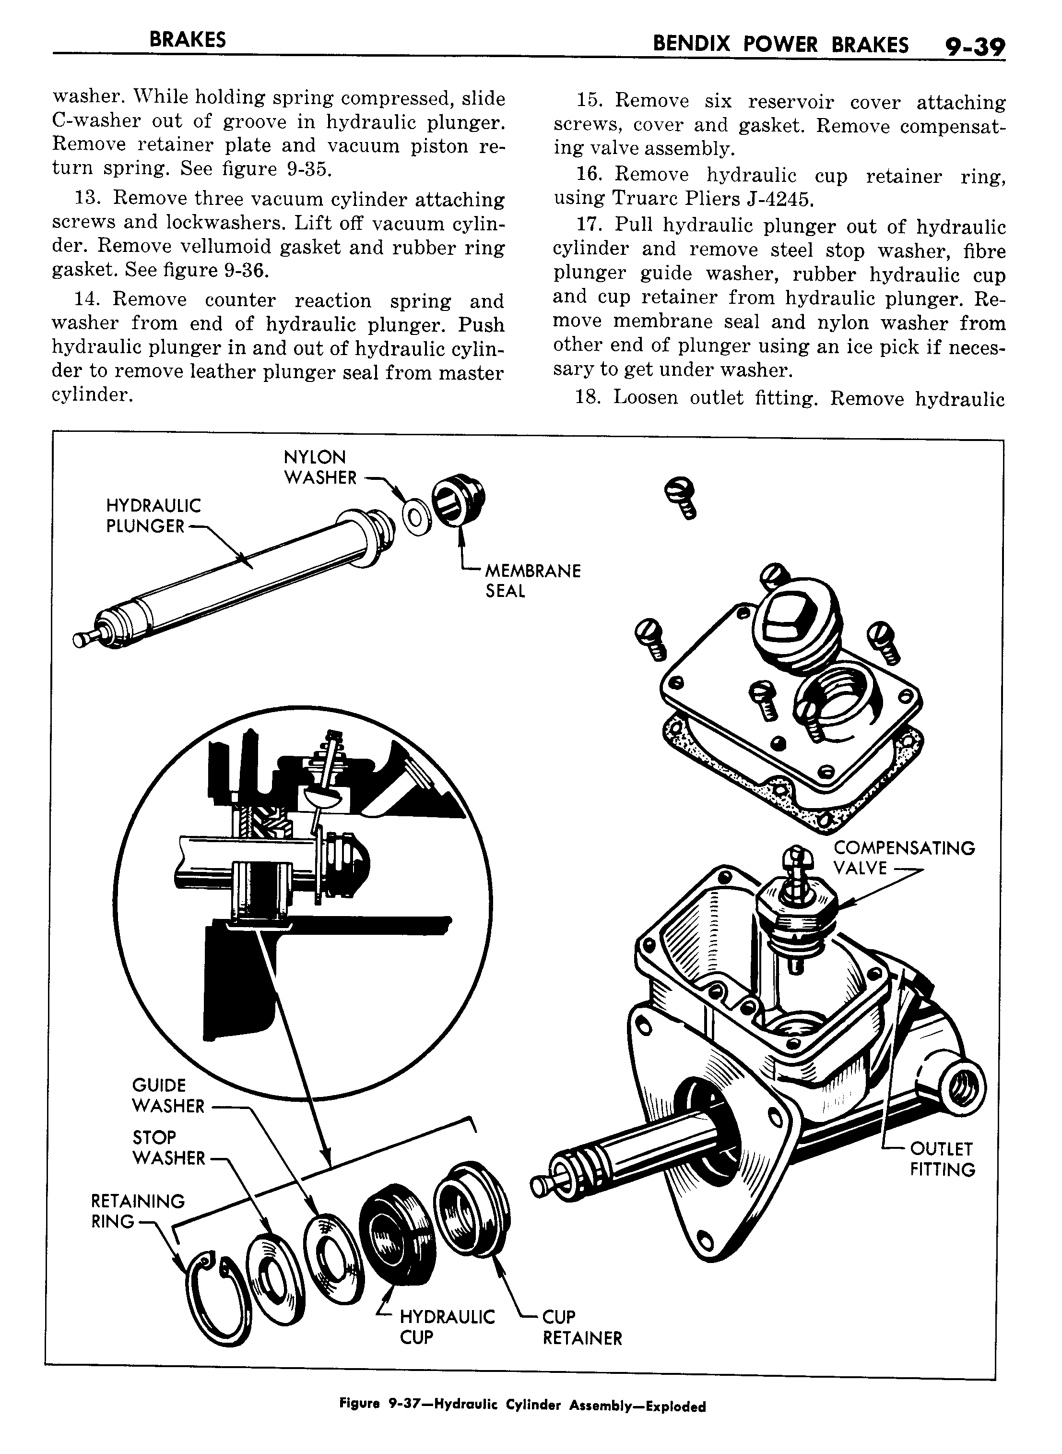 n_10 1957 Buick Shop Manual - Brakes-039-039.jpg